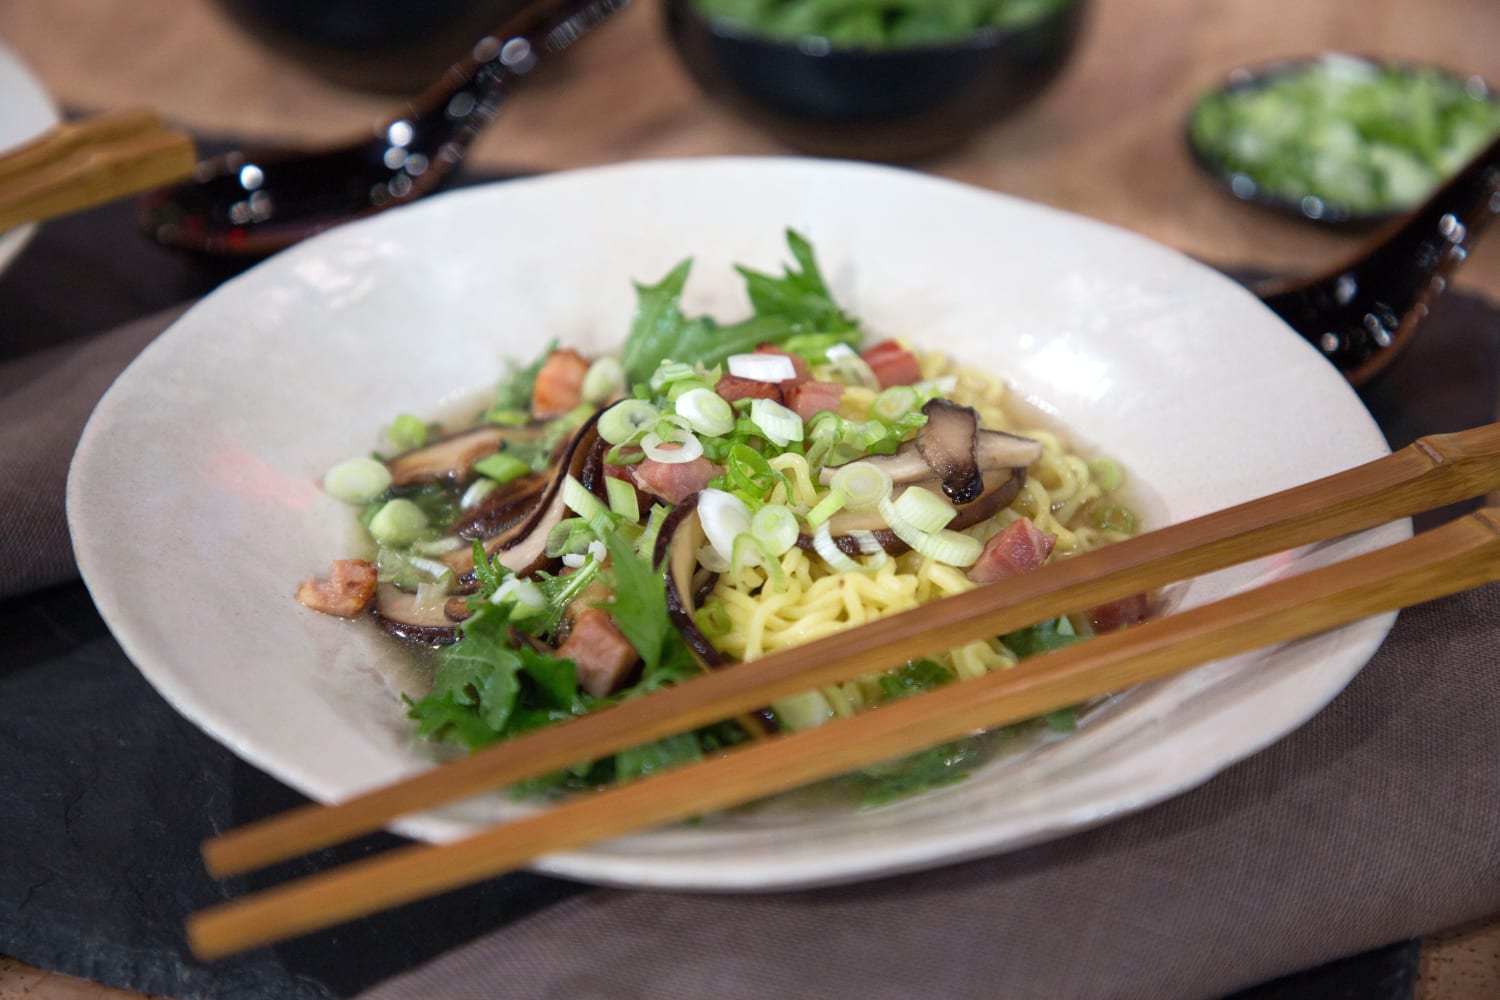 Martha Stewart Chicken Noodle Soup Recipe (With Video)